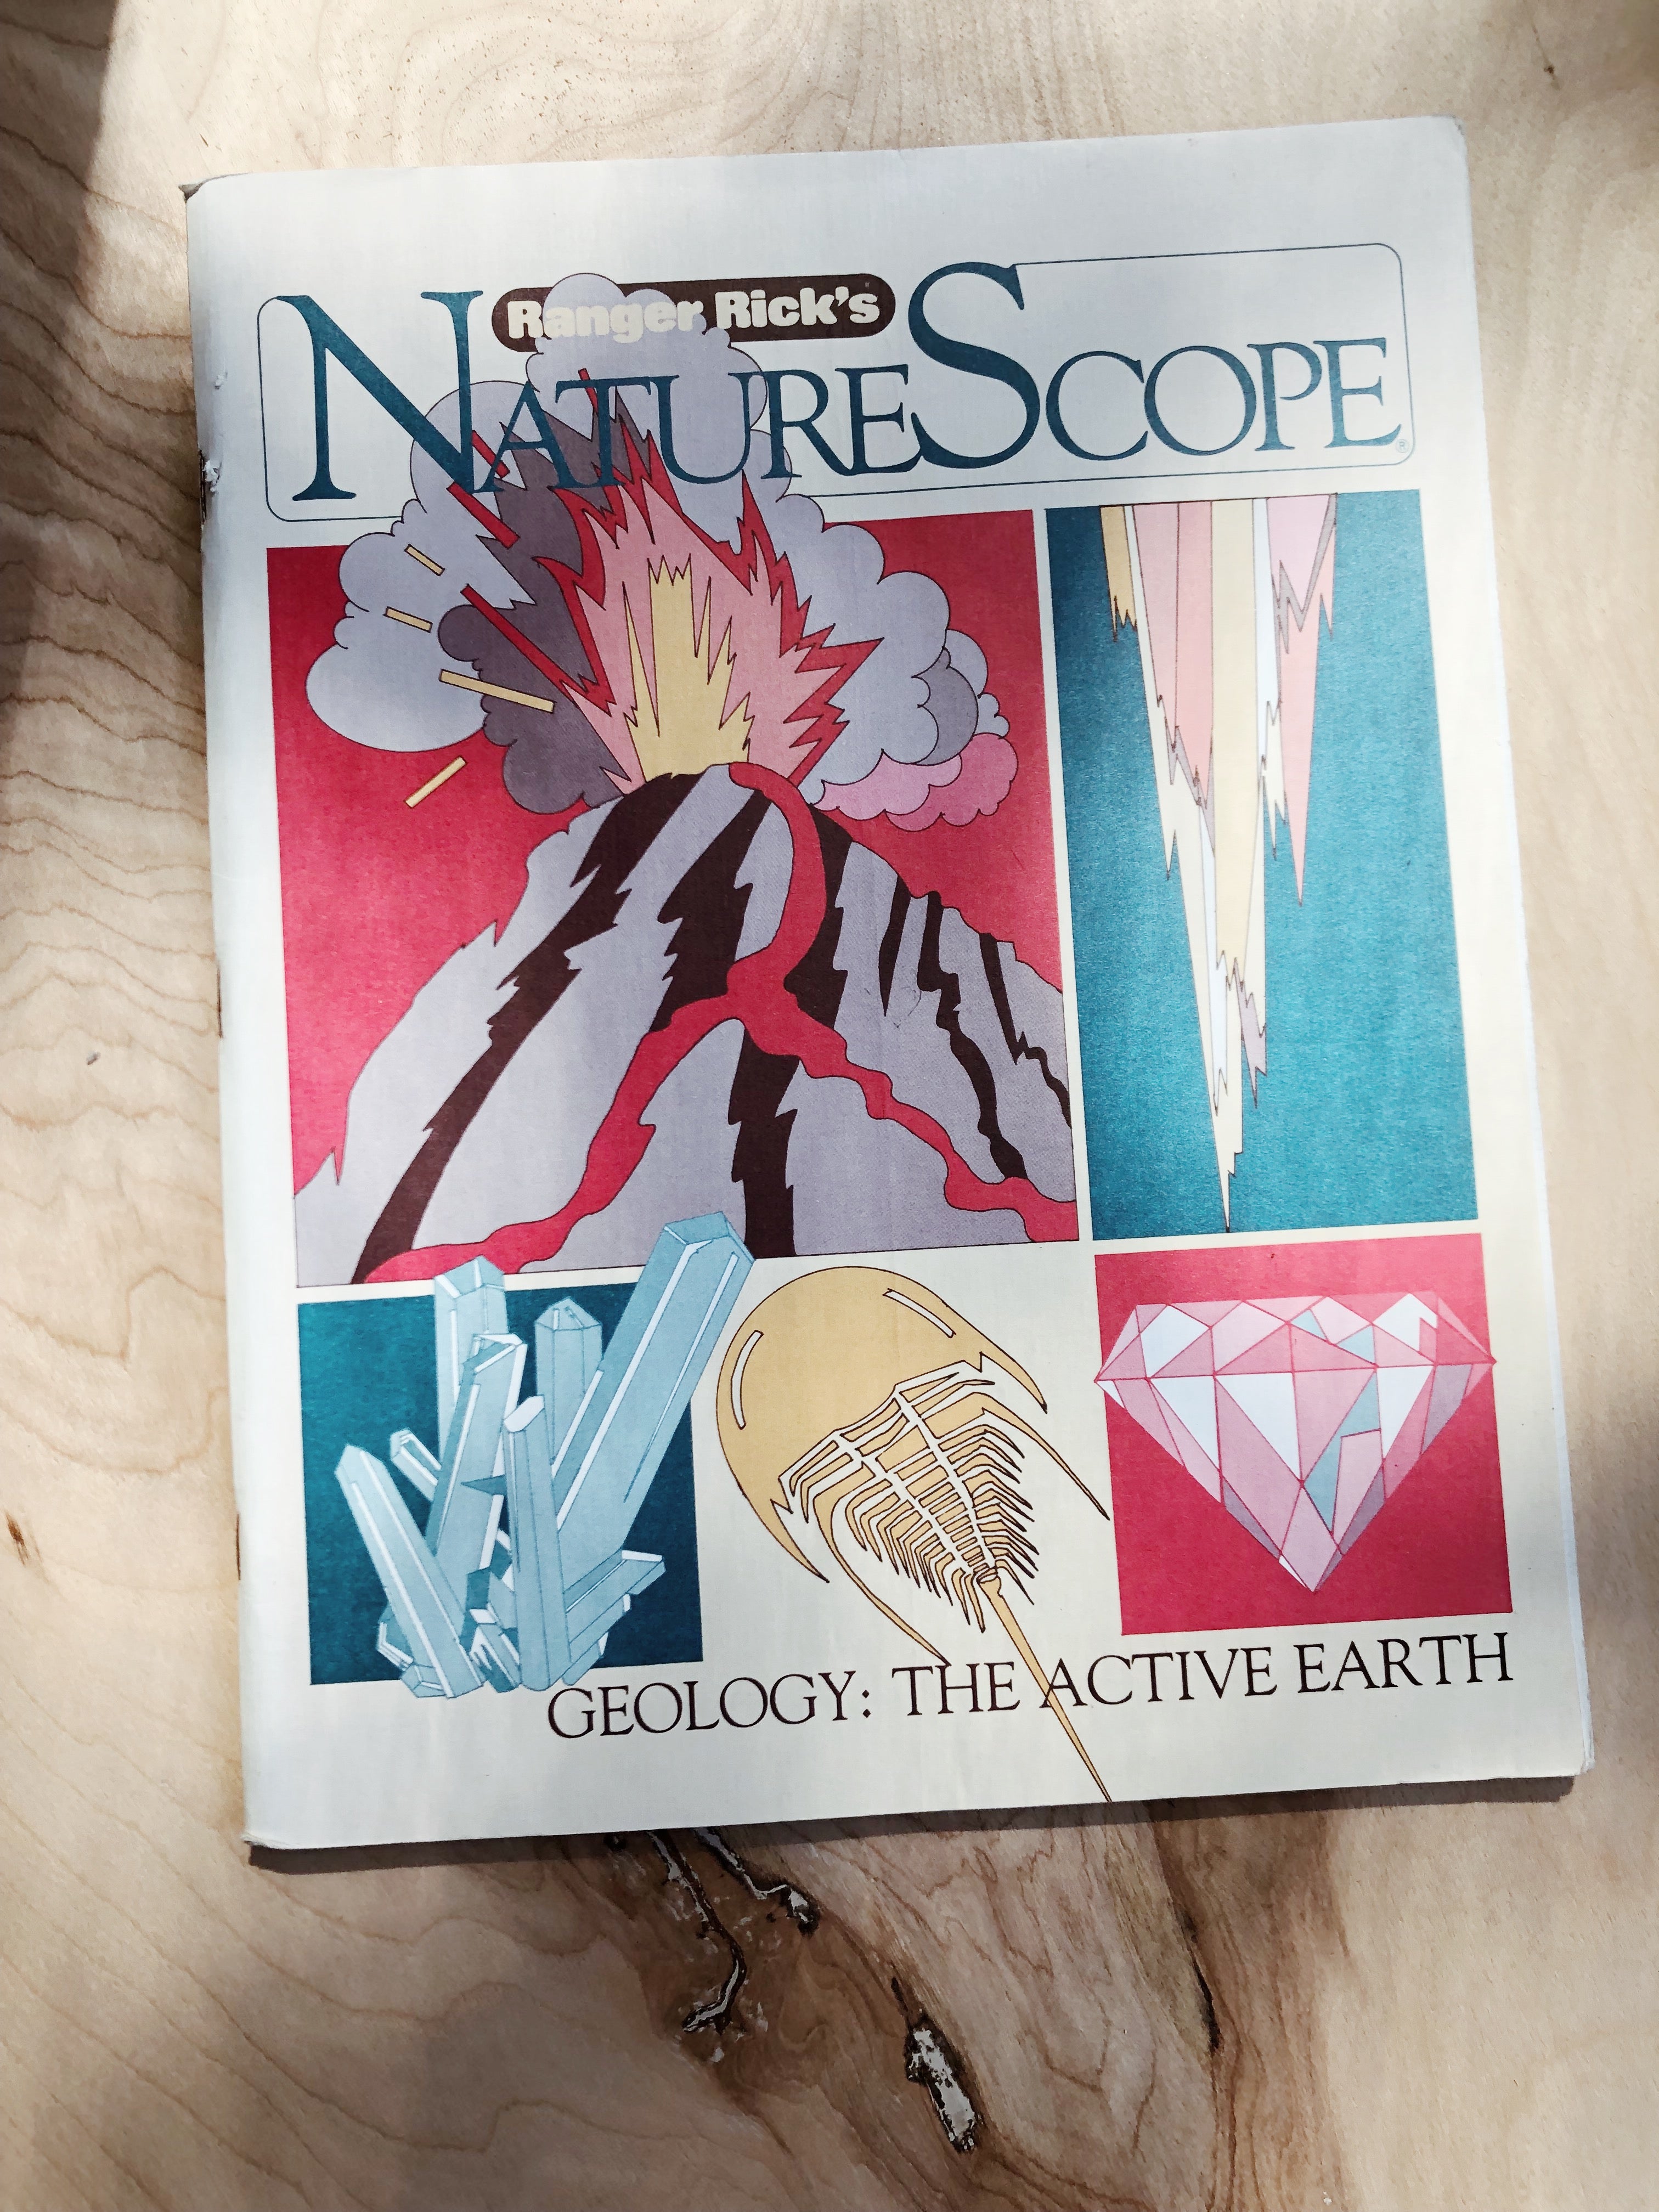 Ranger Ricks' Nature Scope Geology Book